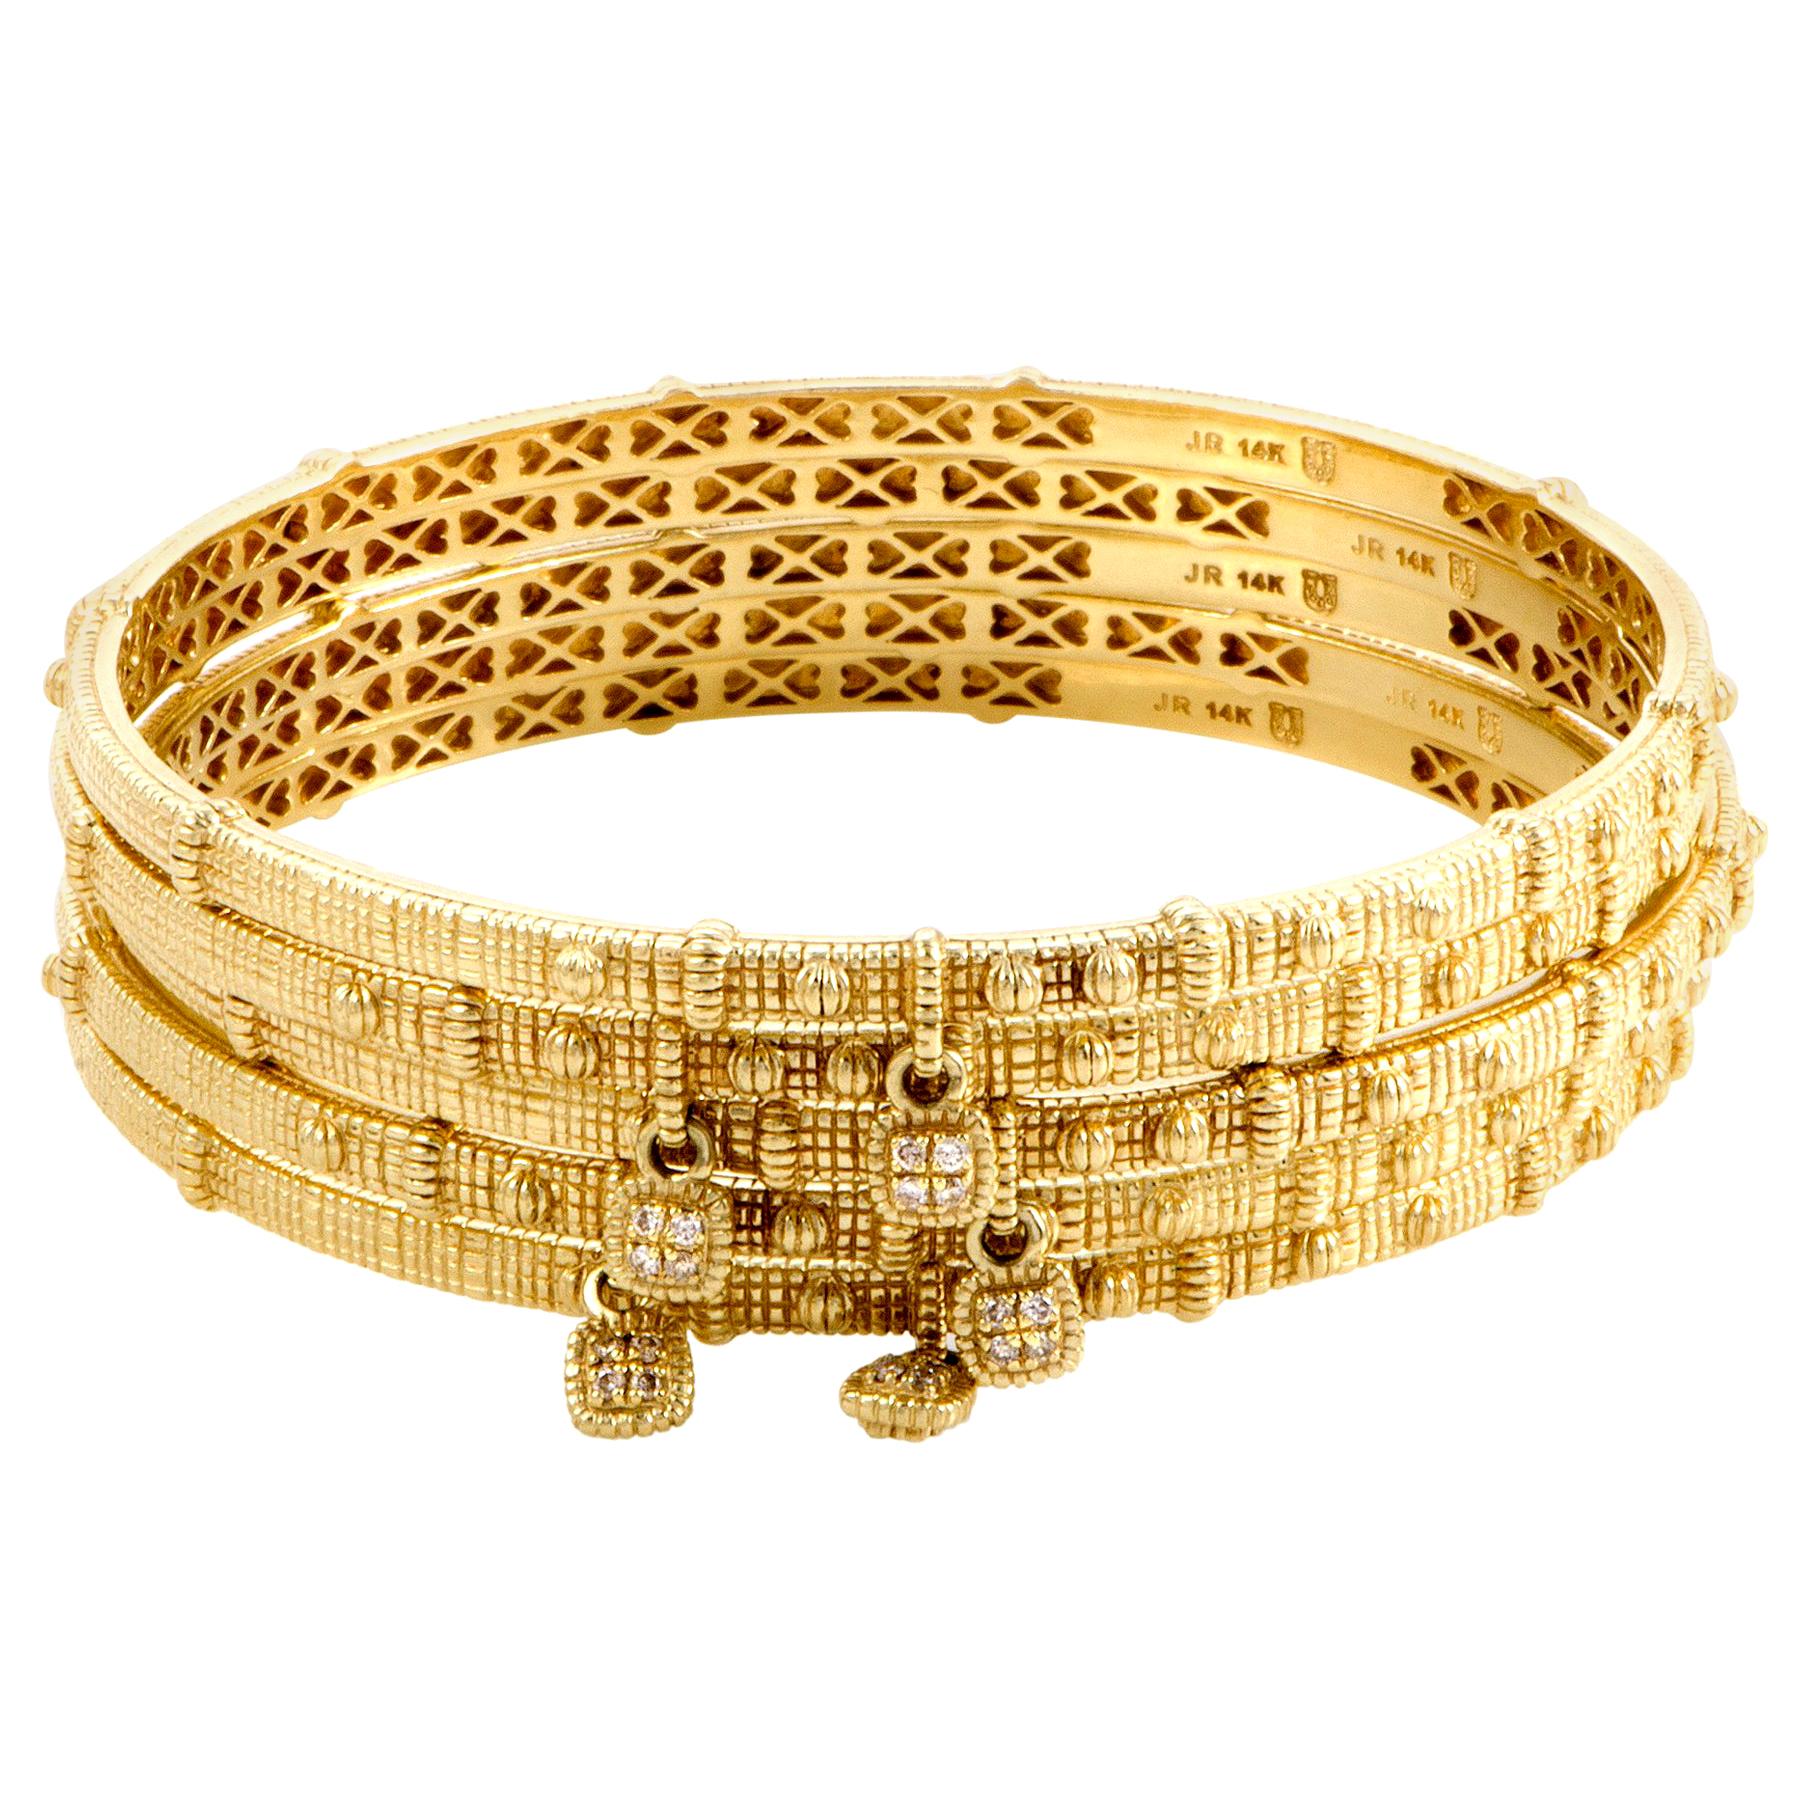 Judith Ripka Diamond Yellow Gold Five-Bangle Bracelet Set